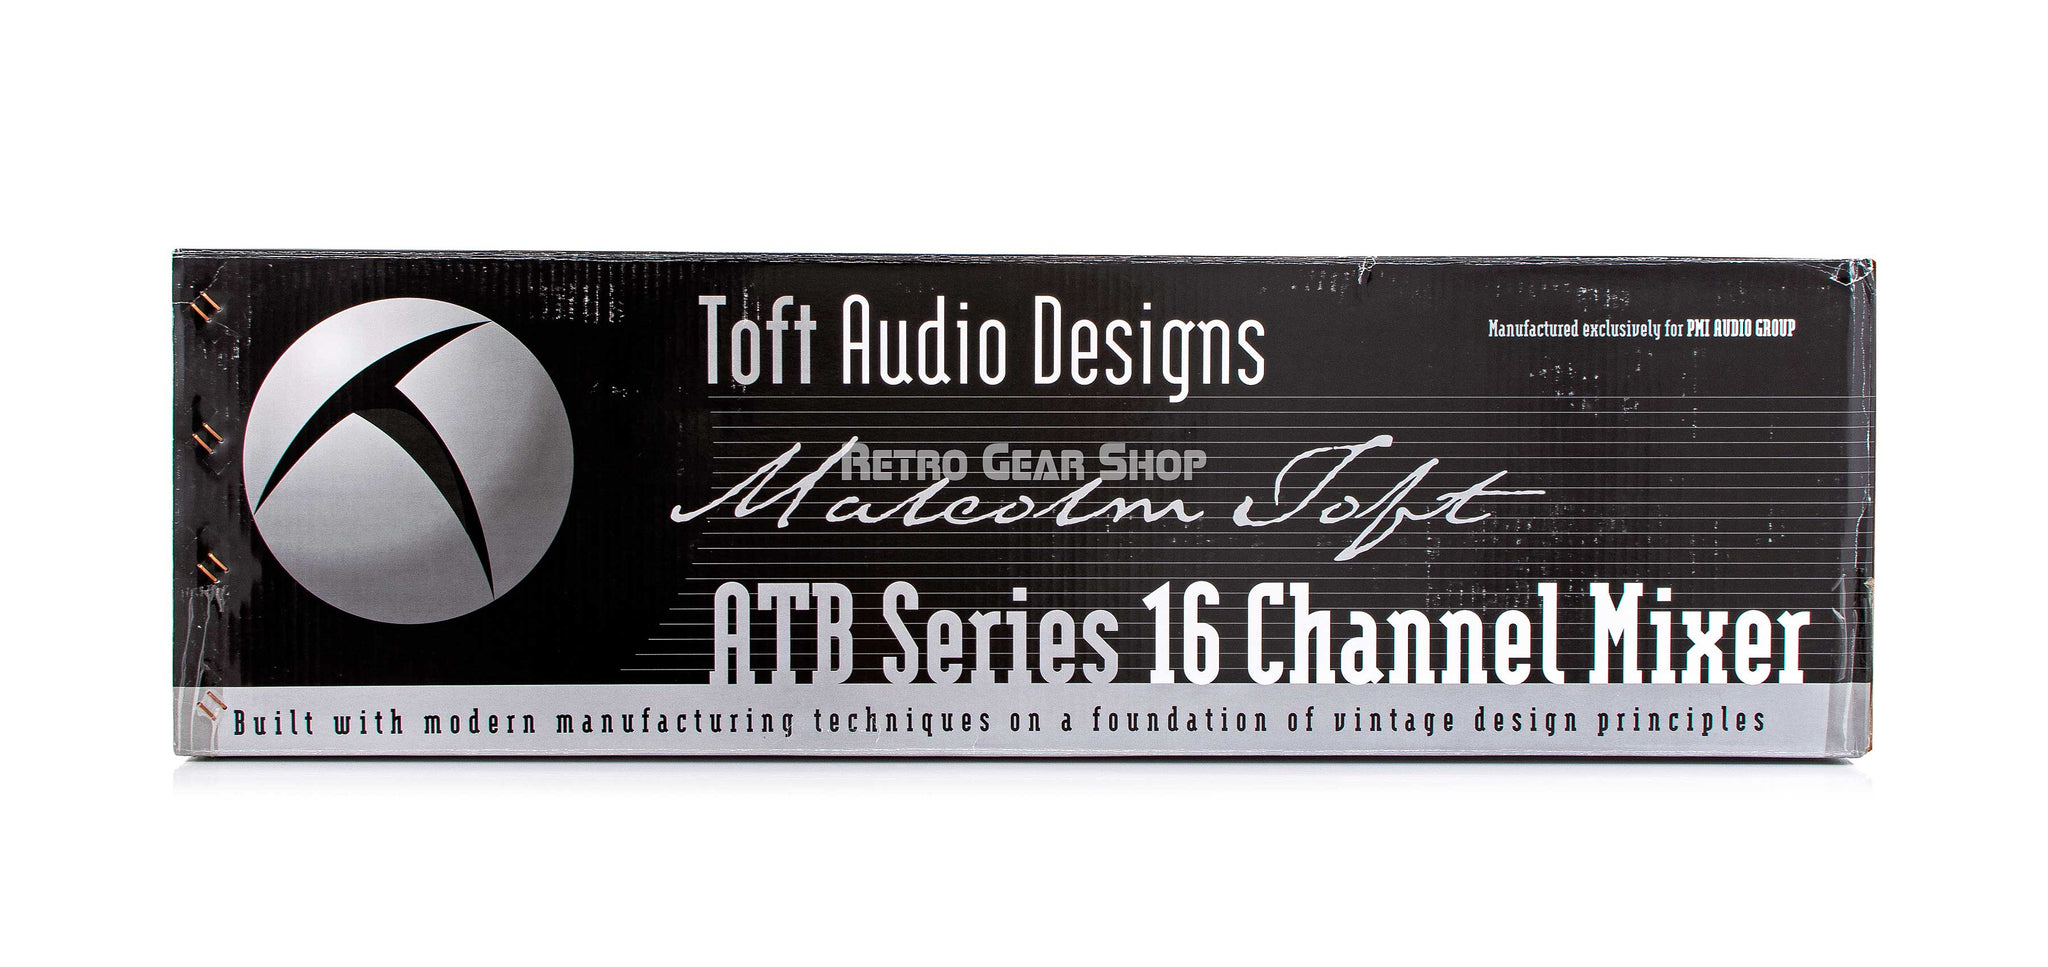 Toft 16 Channel Mixer Box